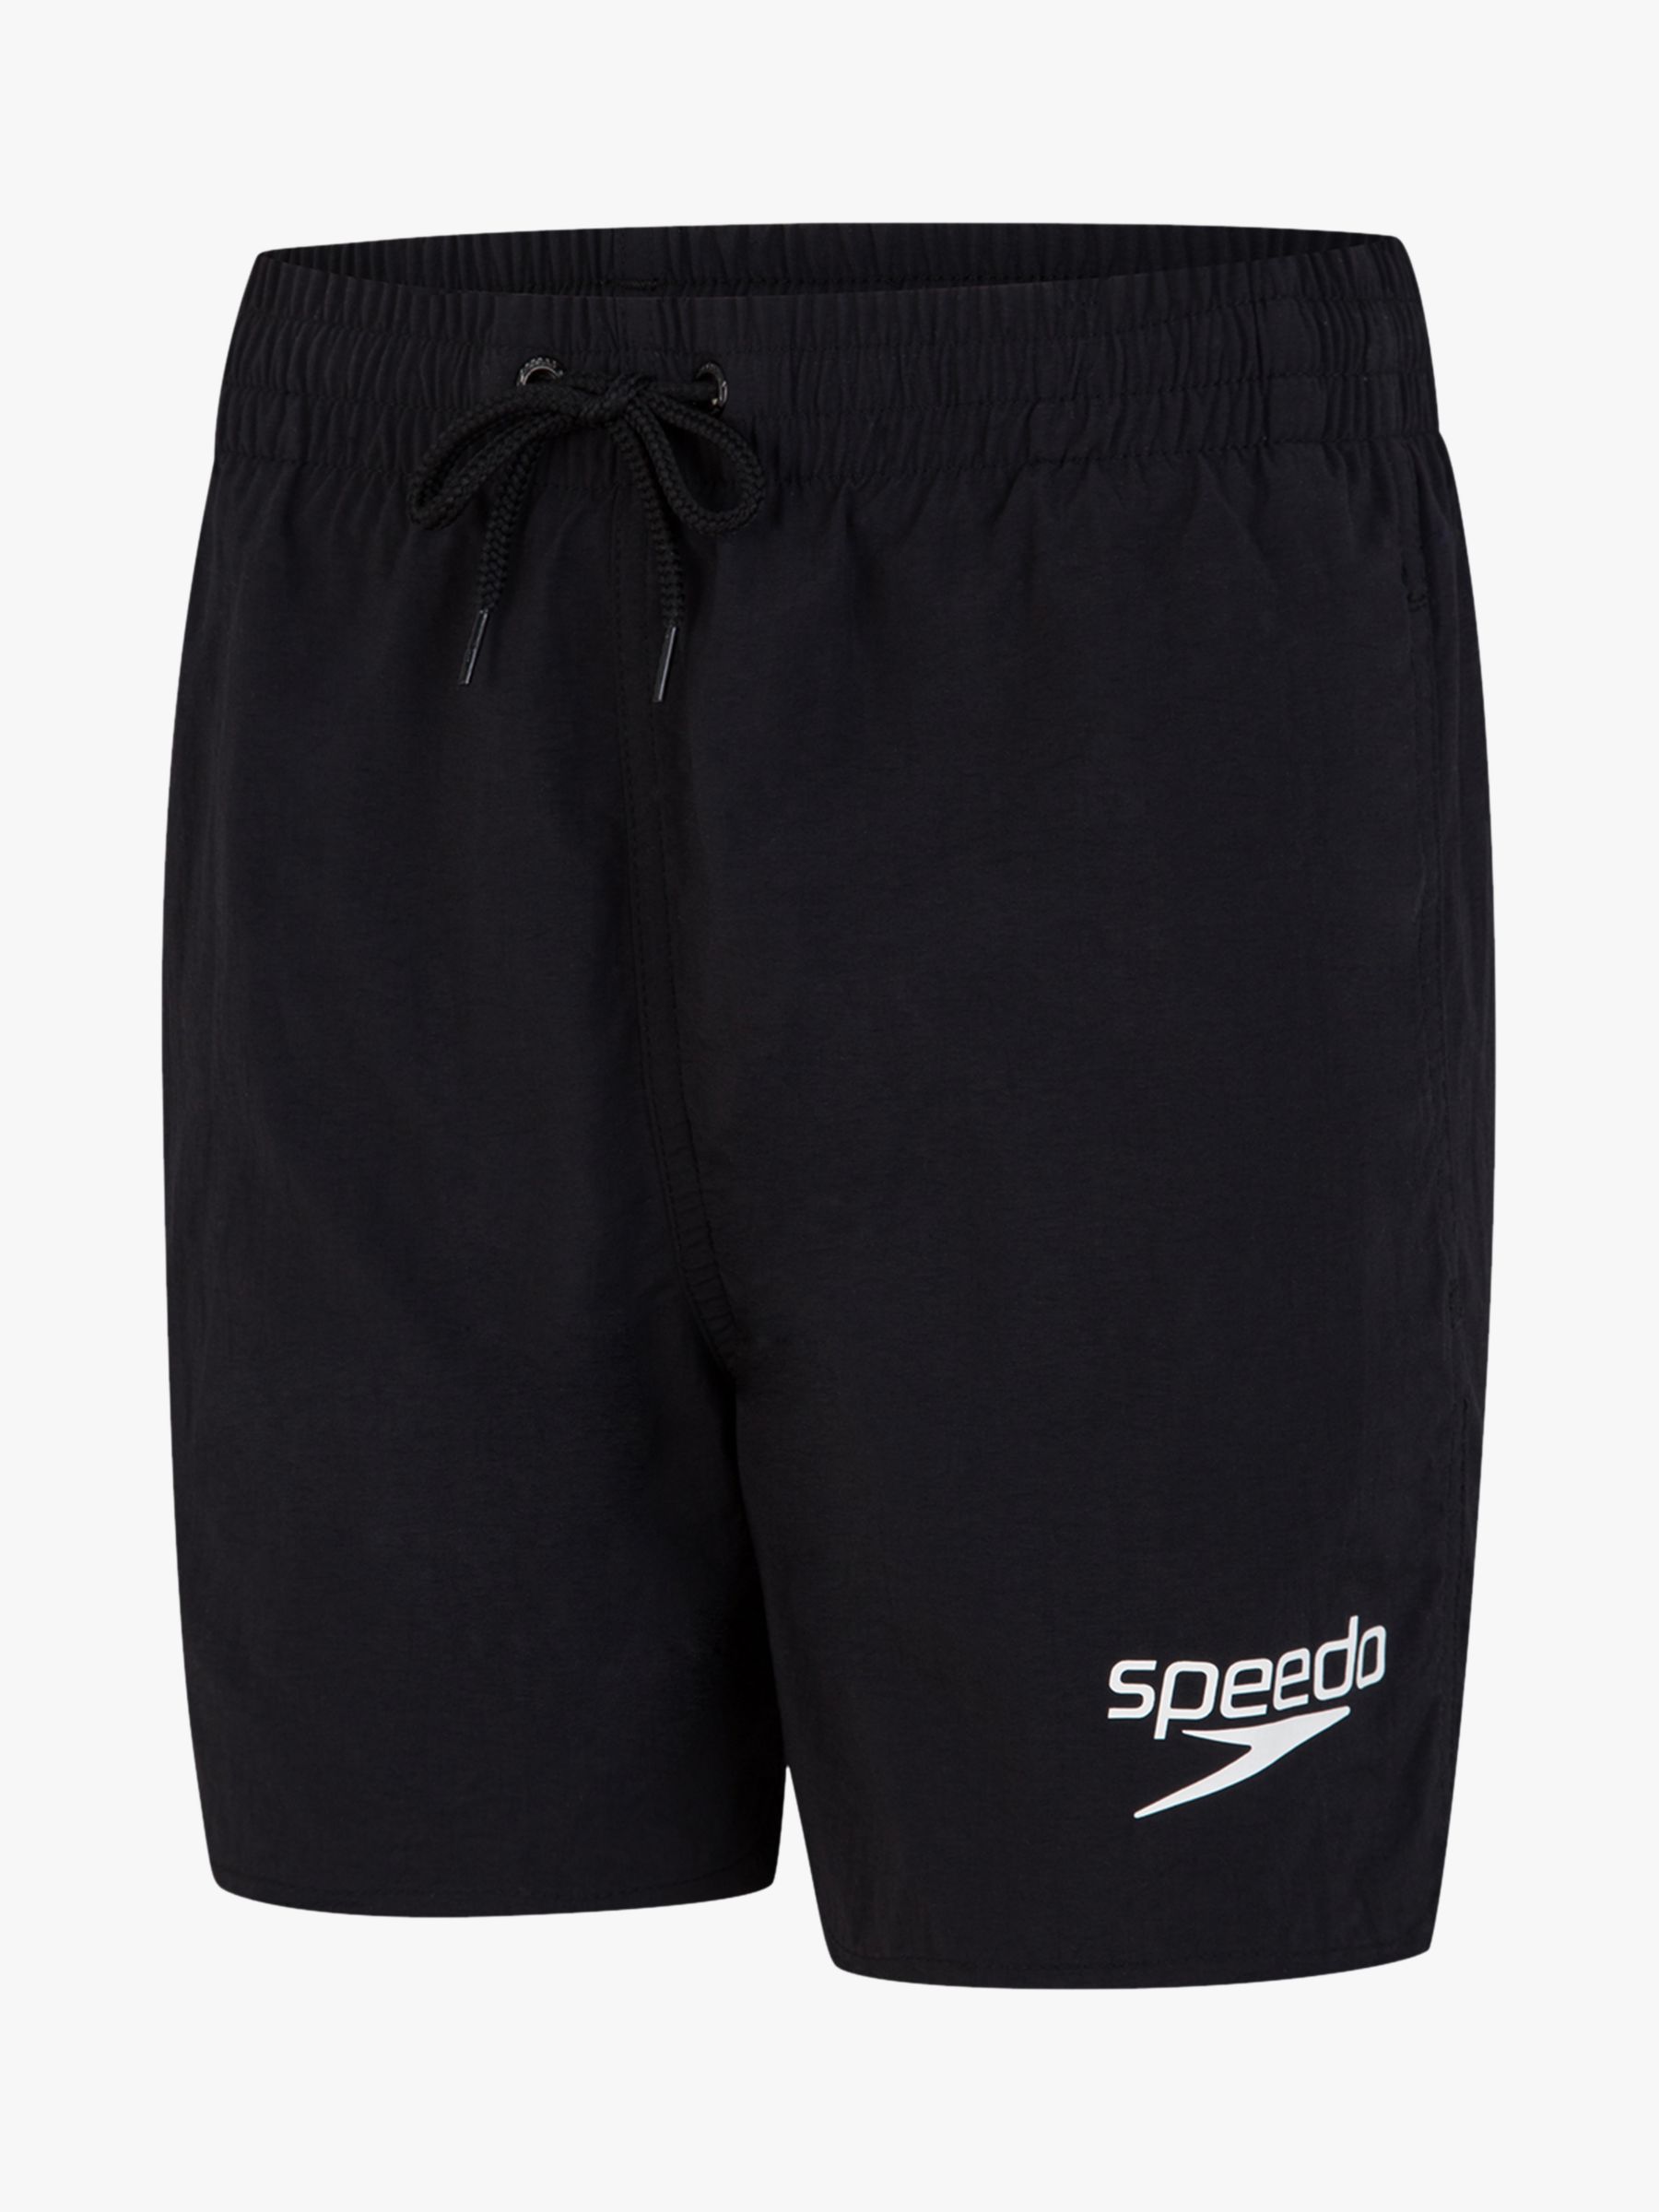 Speedo Boys' Essentials 13" Swim Shorts, Black, XS